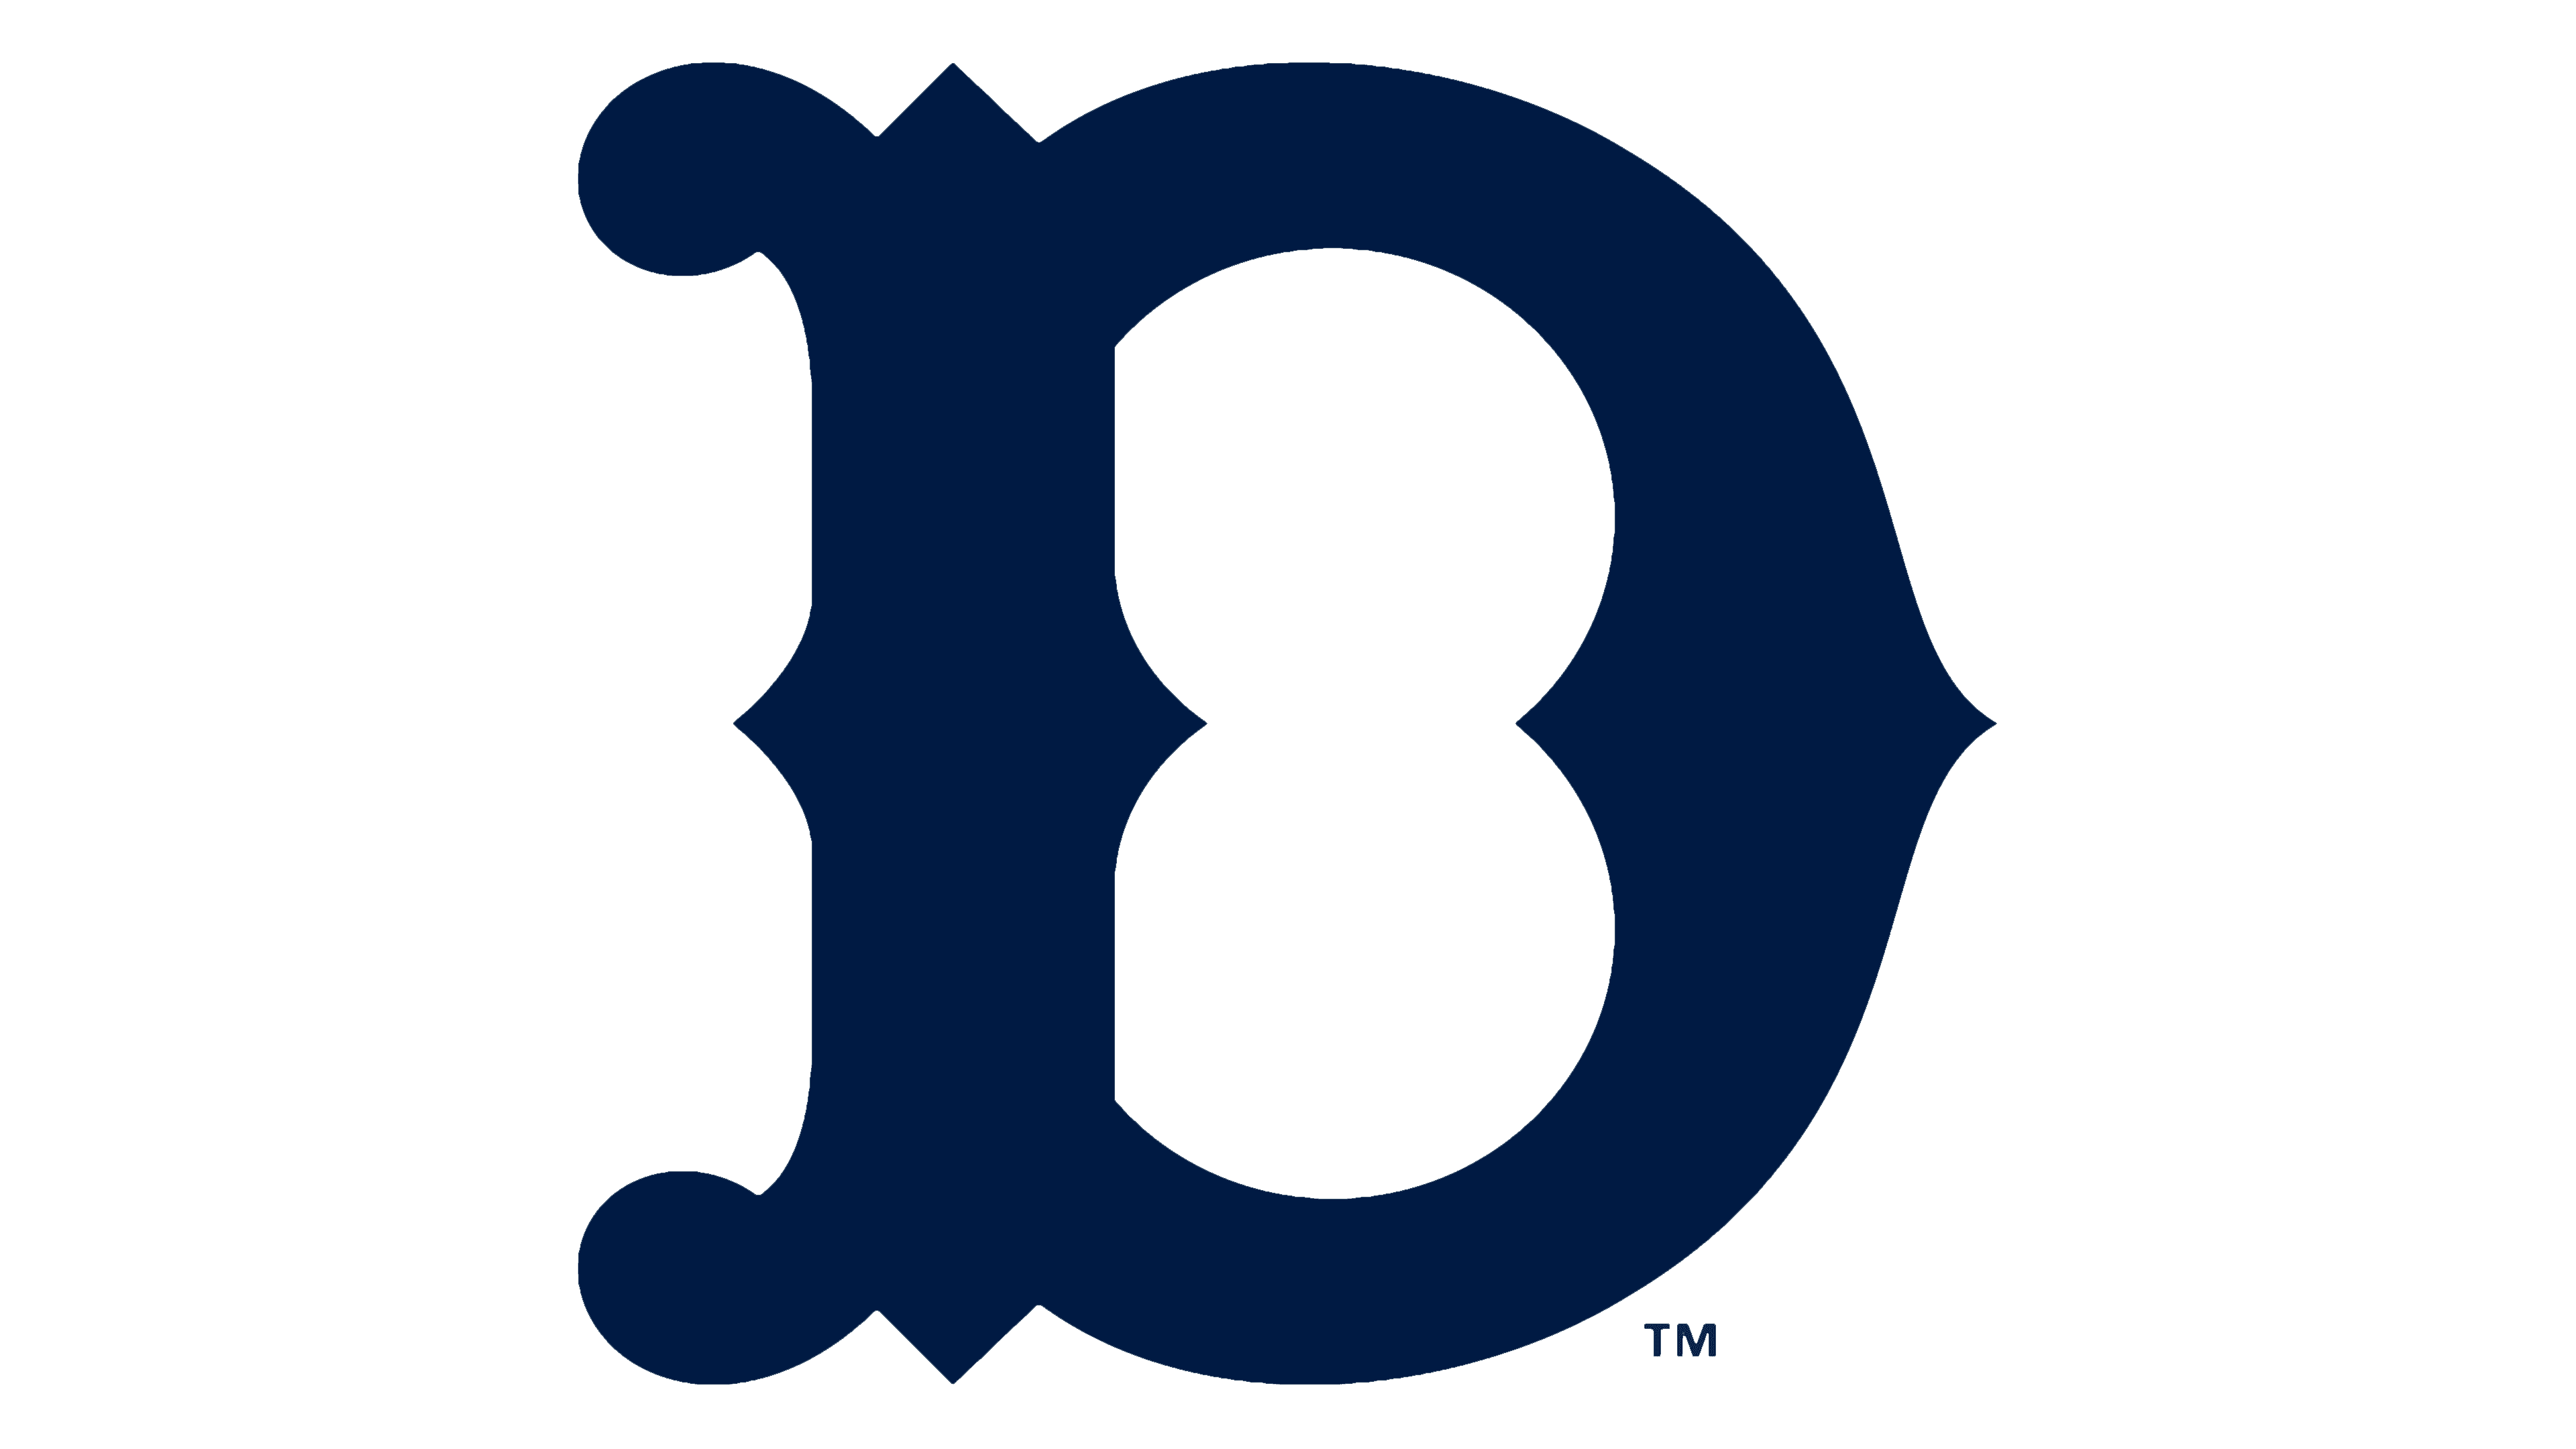 Download Detroit Tigers Logo In Dark Blue Gothic Font Wallpaper